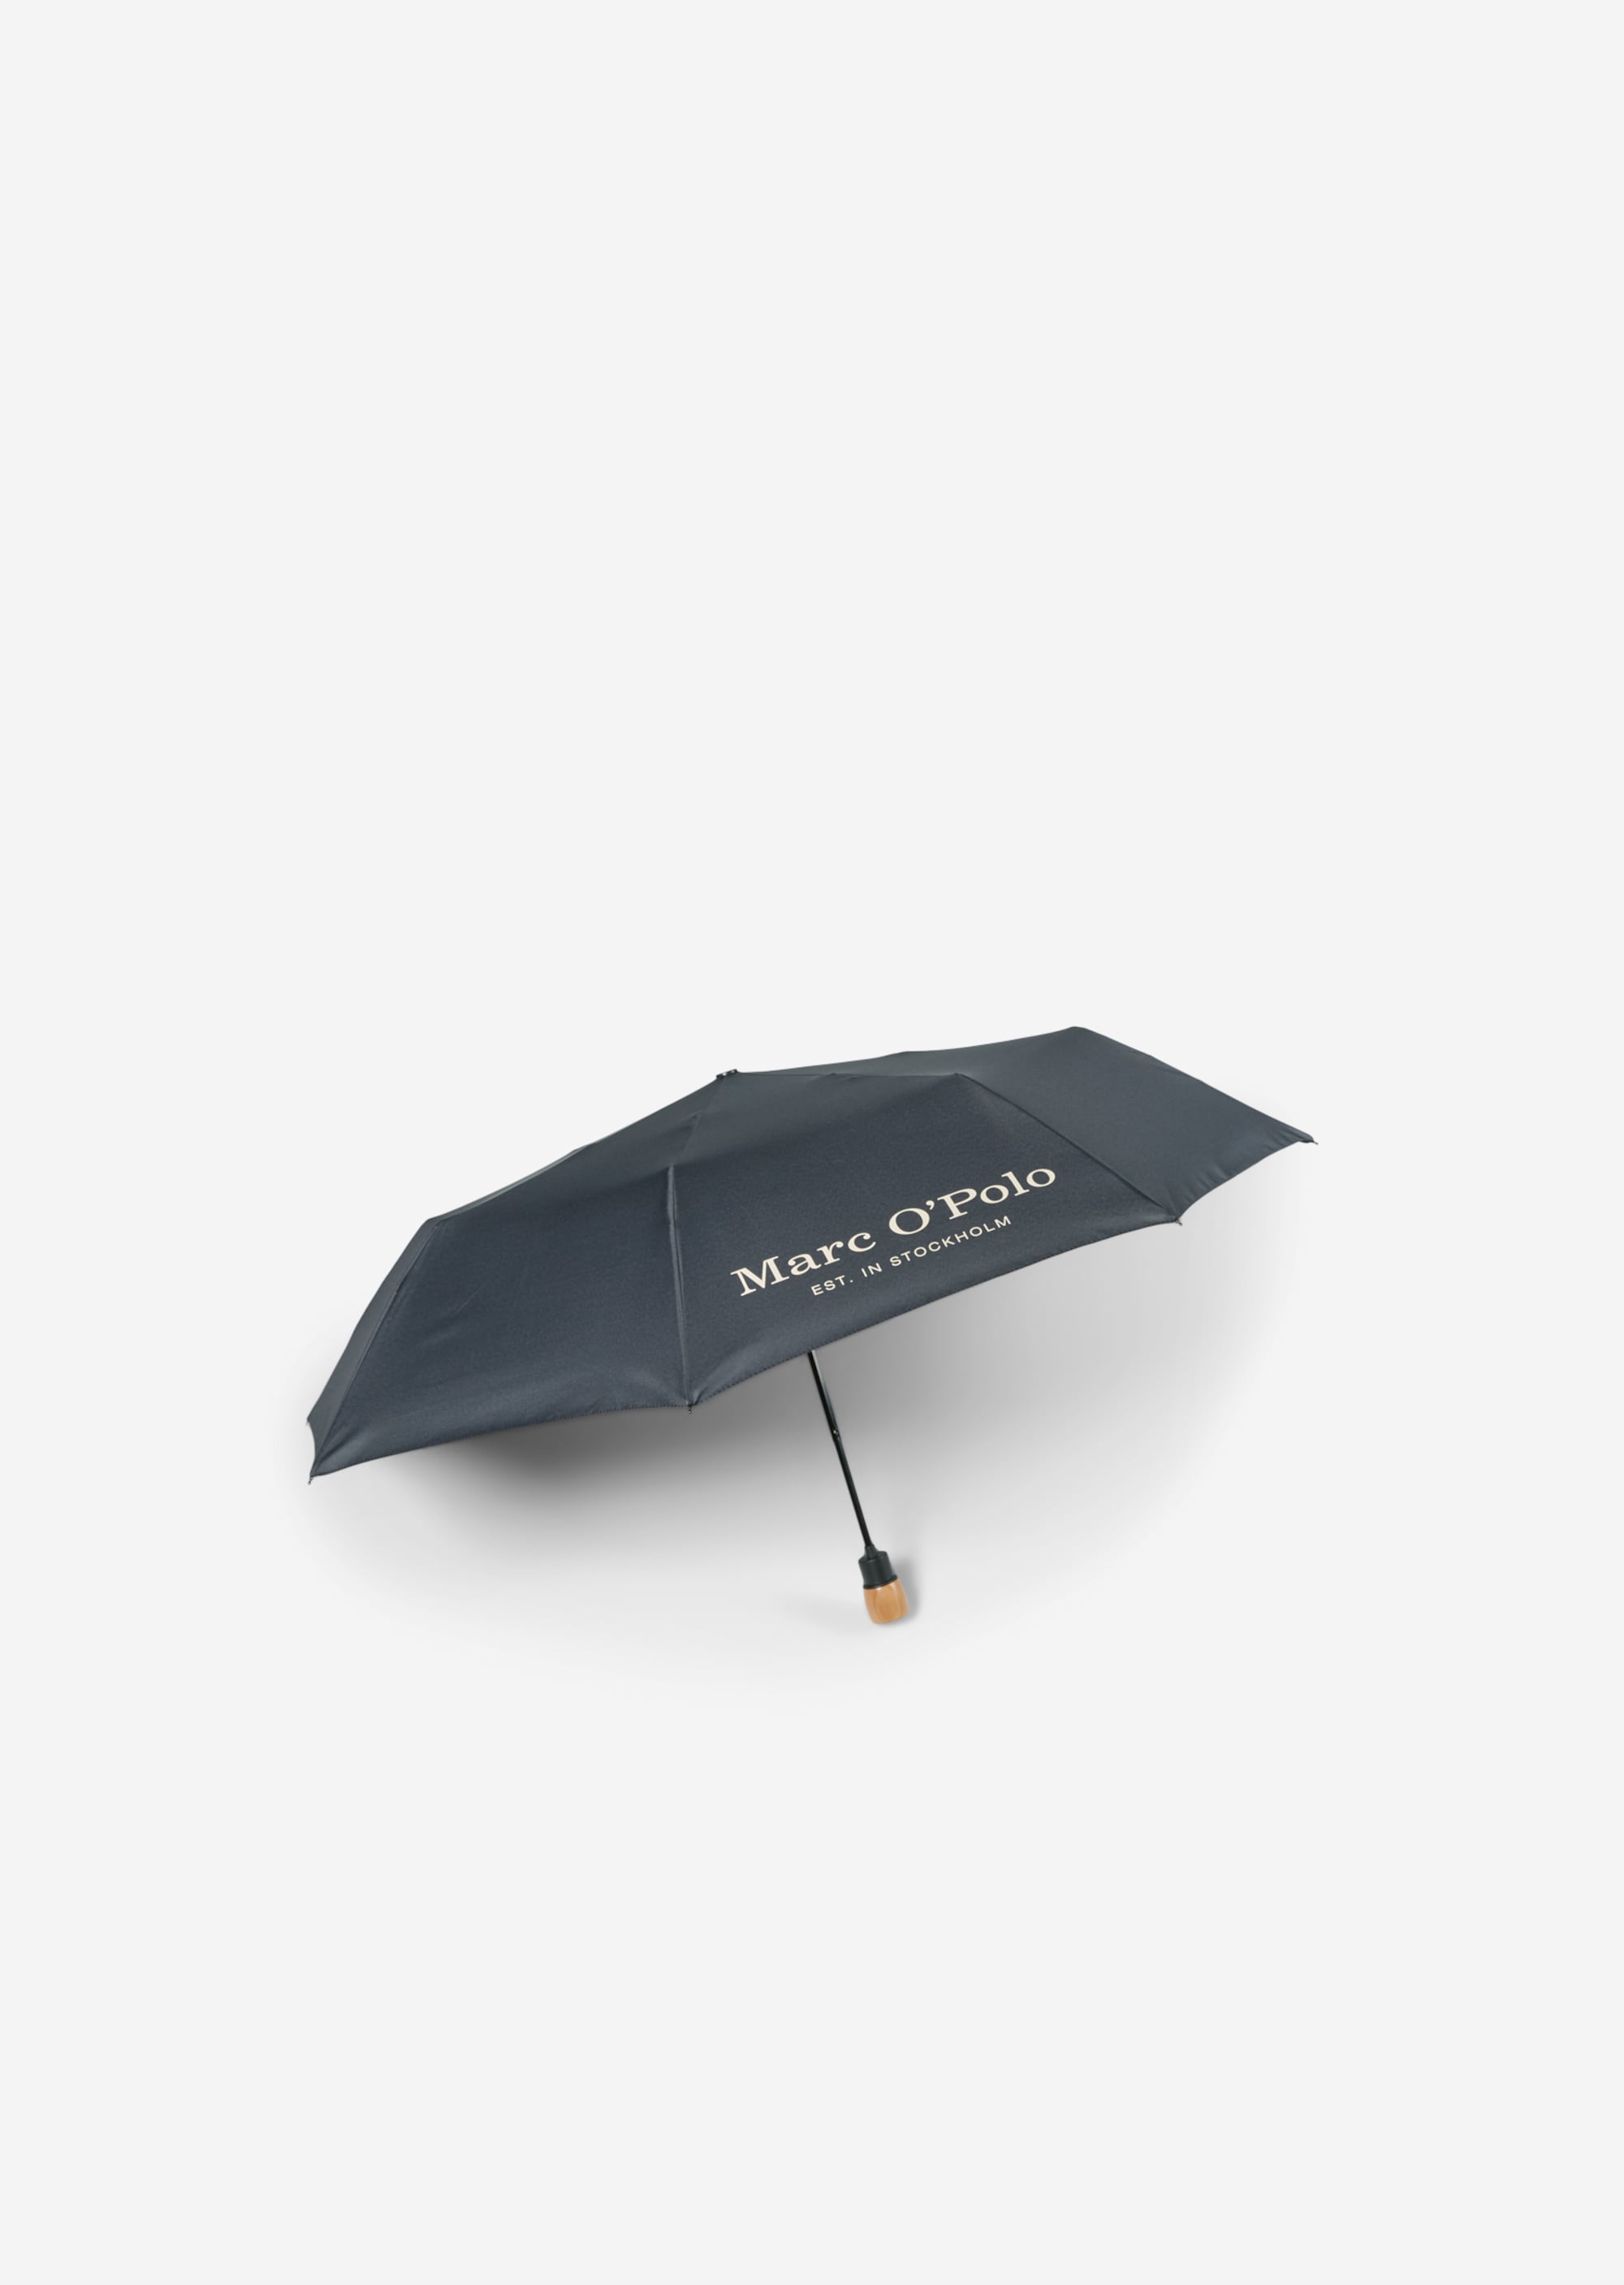 Minischirm mit Automatiköffner - grau, Regenschirm